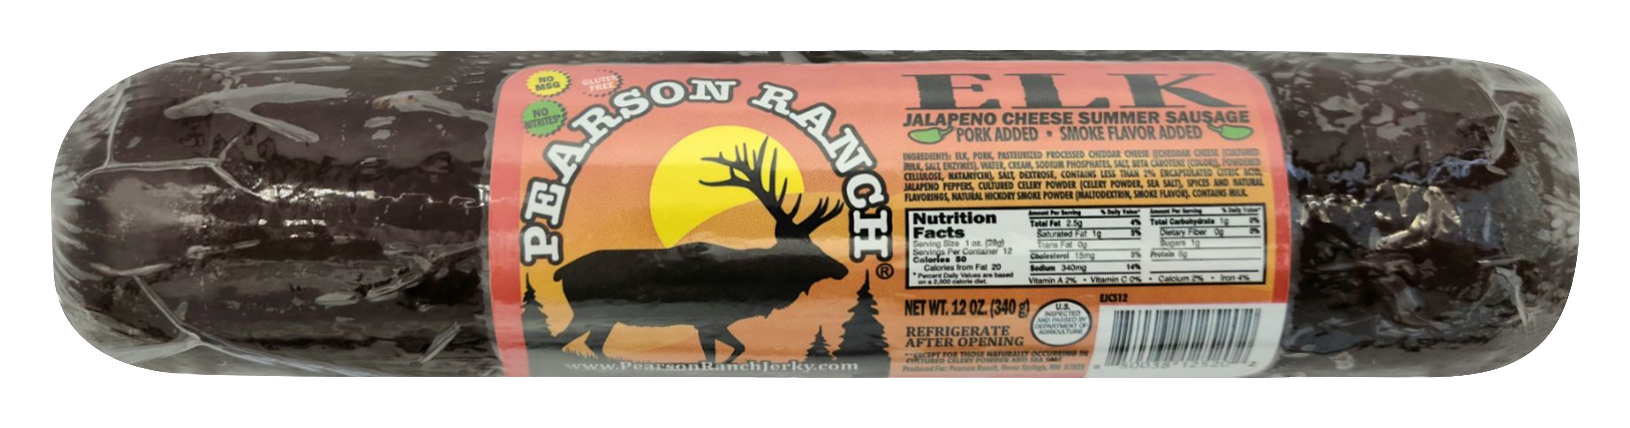 Pearson Ranch Jalapeno Cheese Elk Summer Sausage